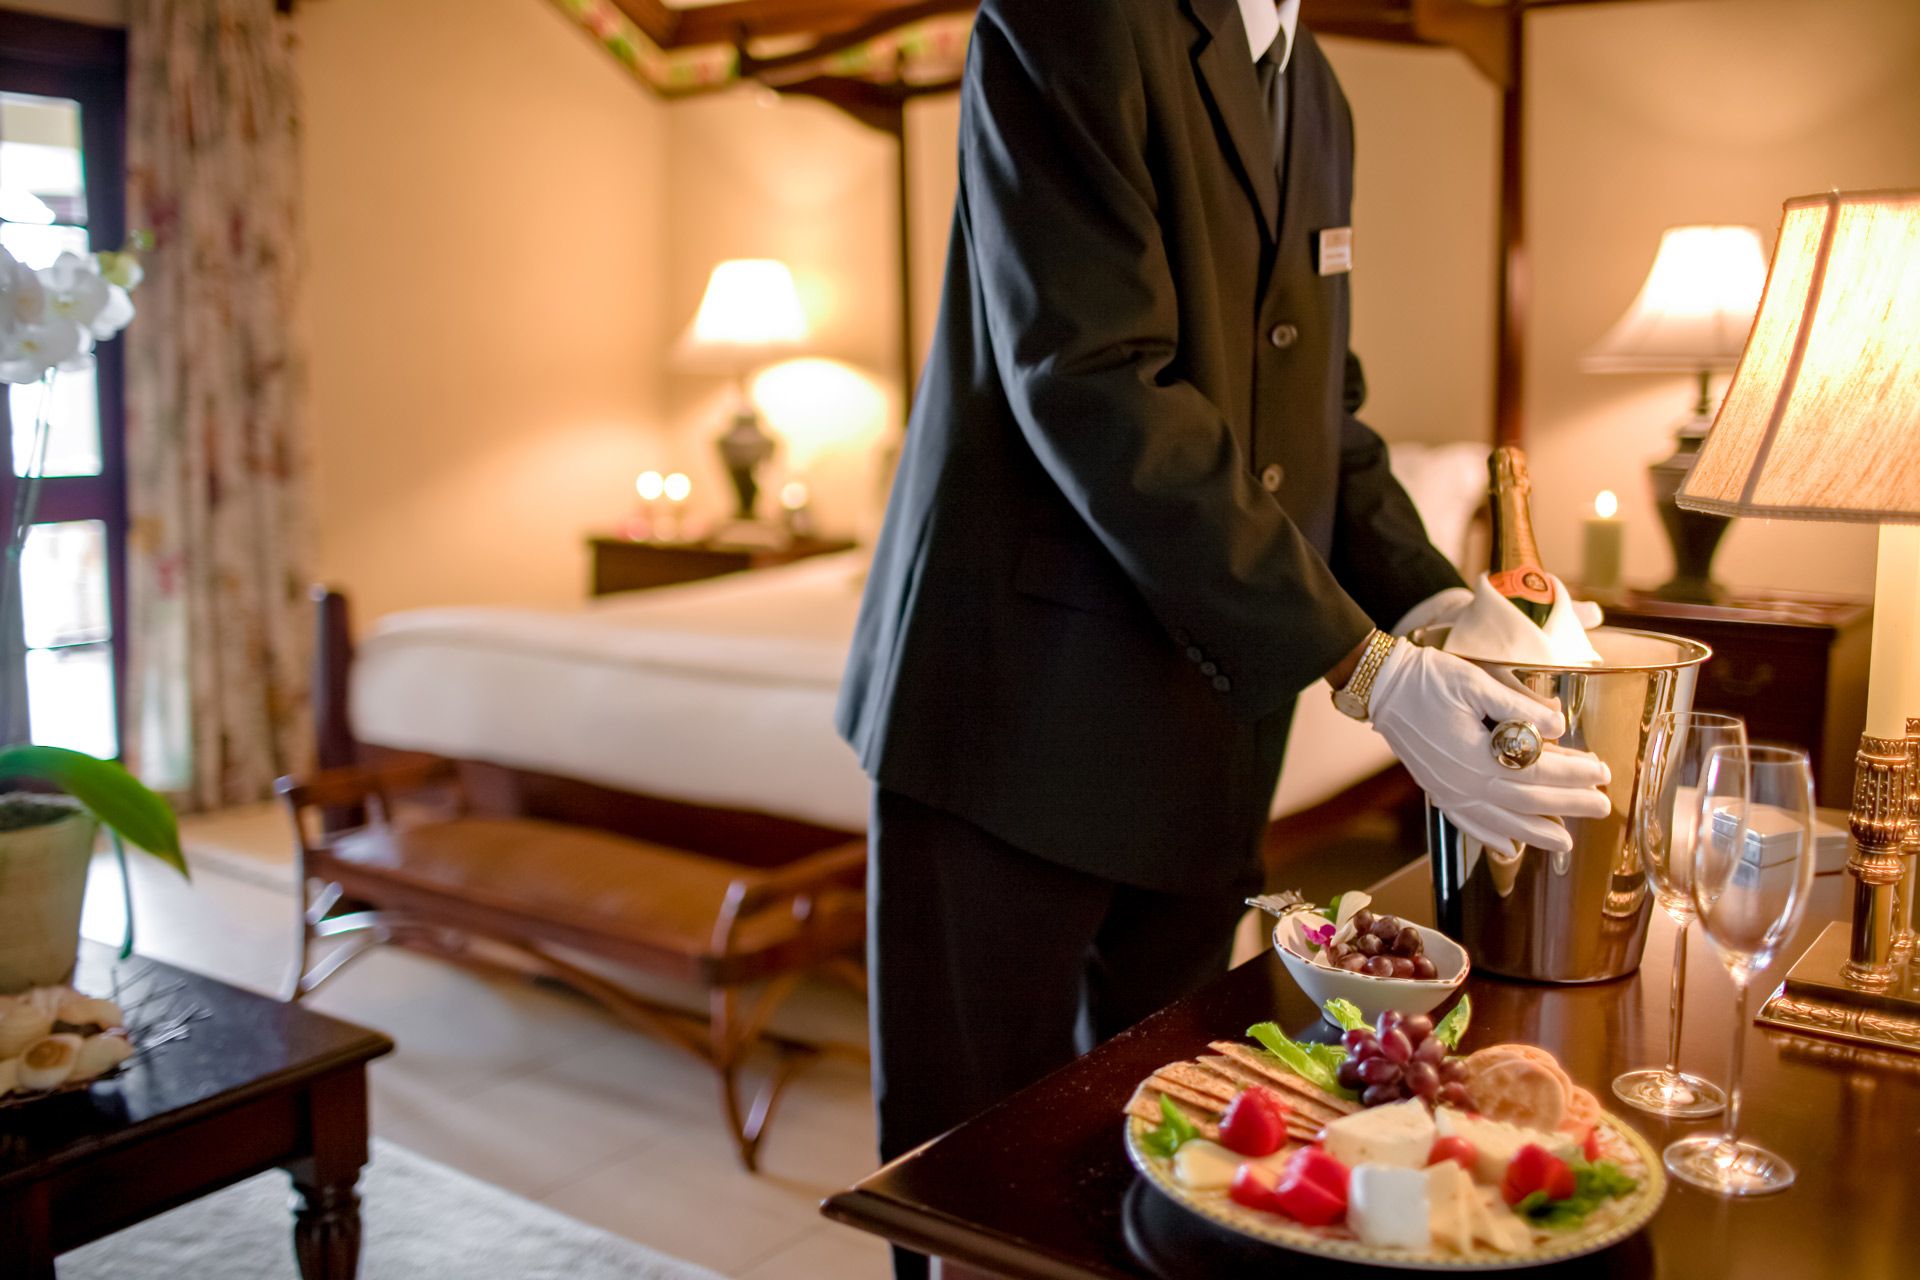 Butler room service